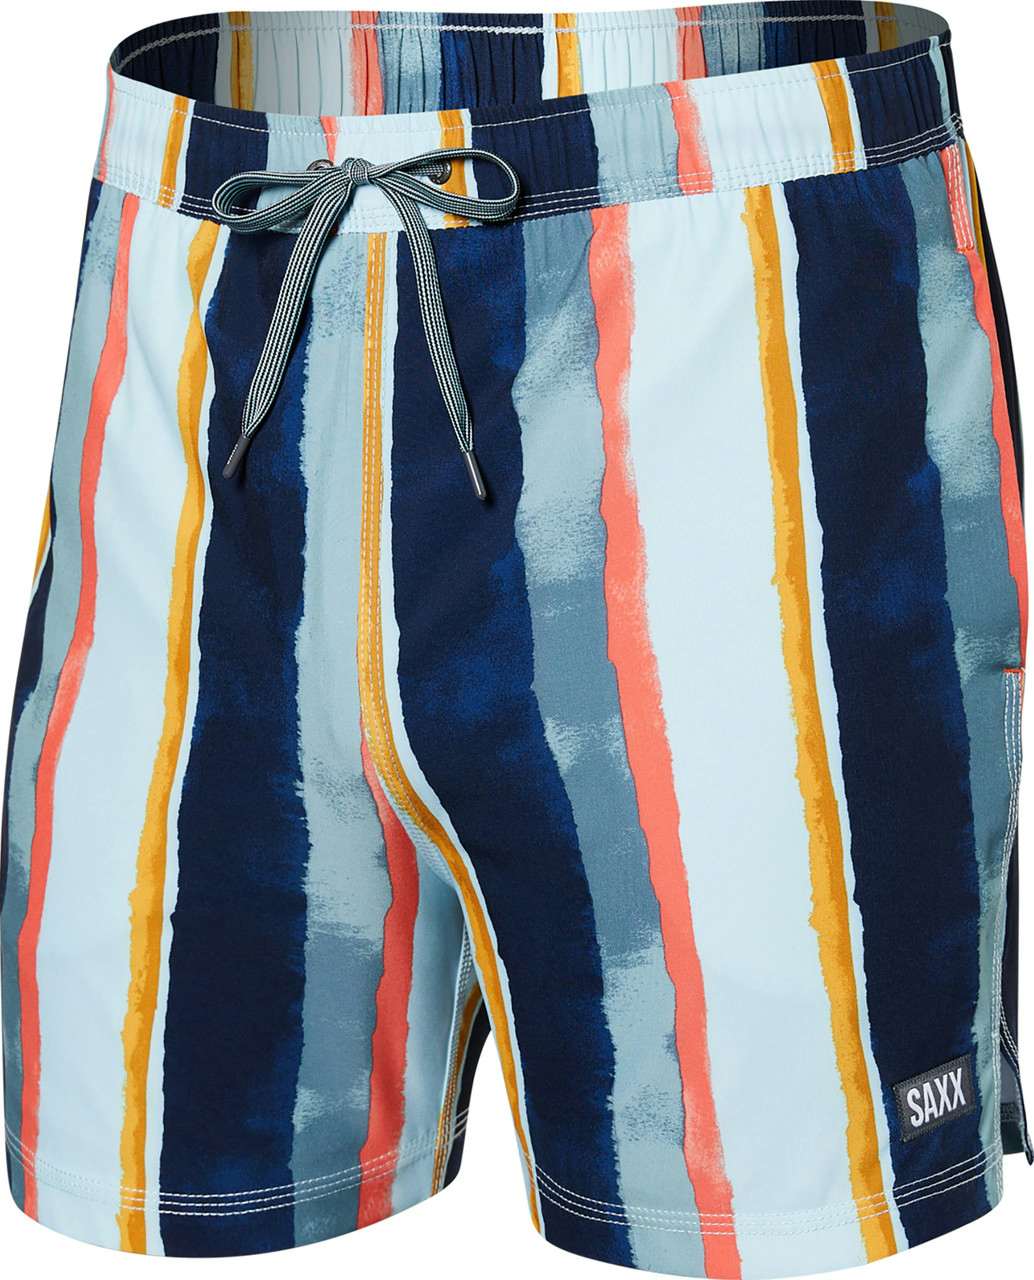 Oh Buoy 2N1 Volley Shorts 5" H20 Stripe/Blue